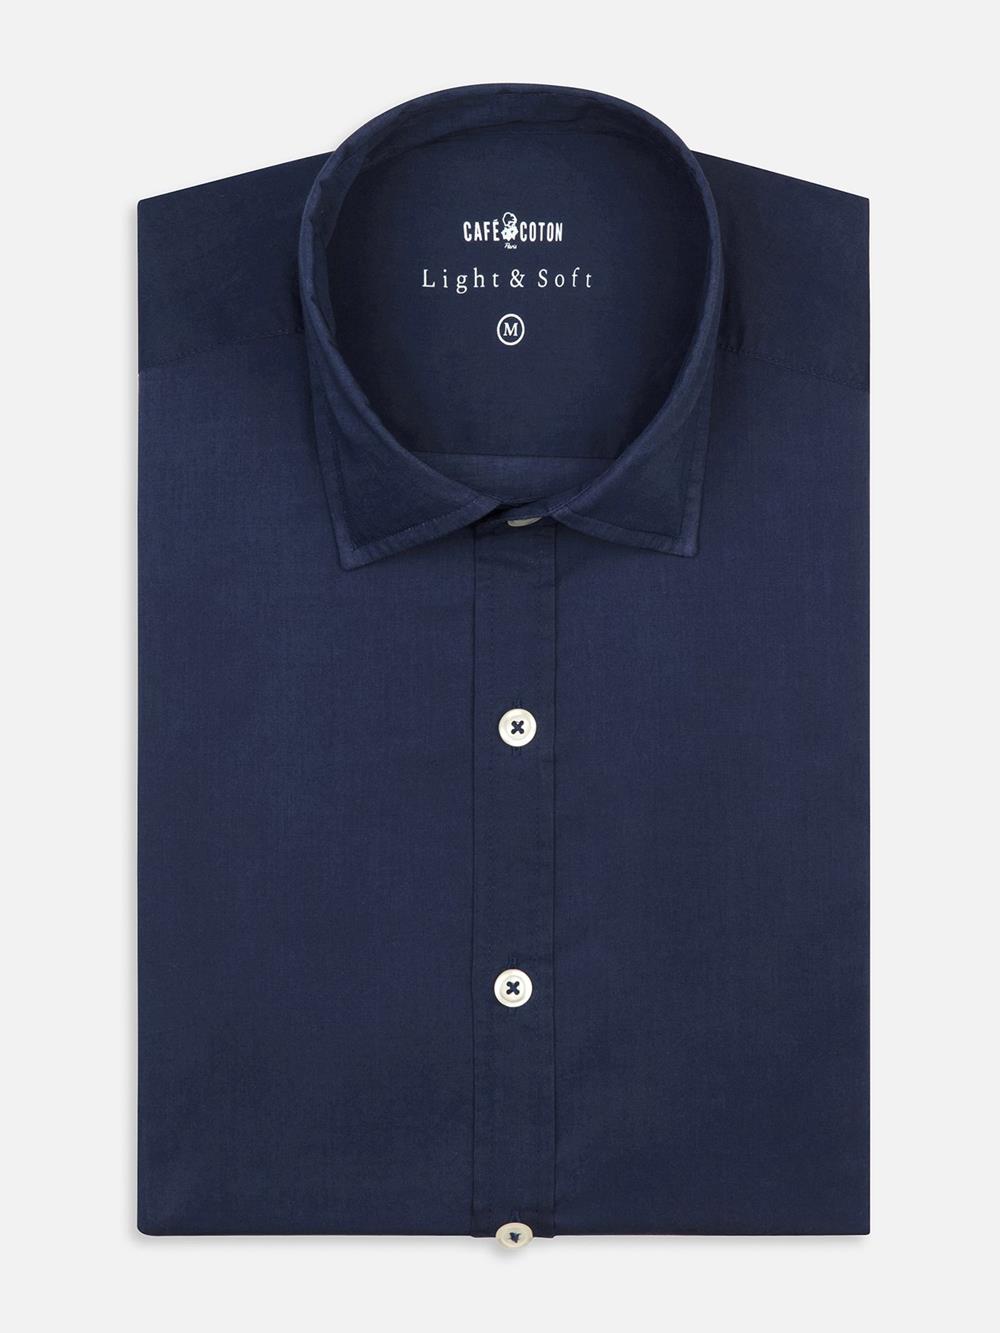 Navy cotton voile shirt